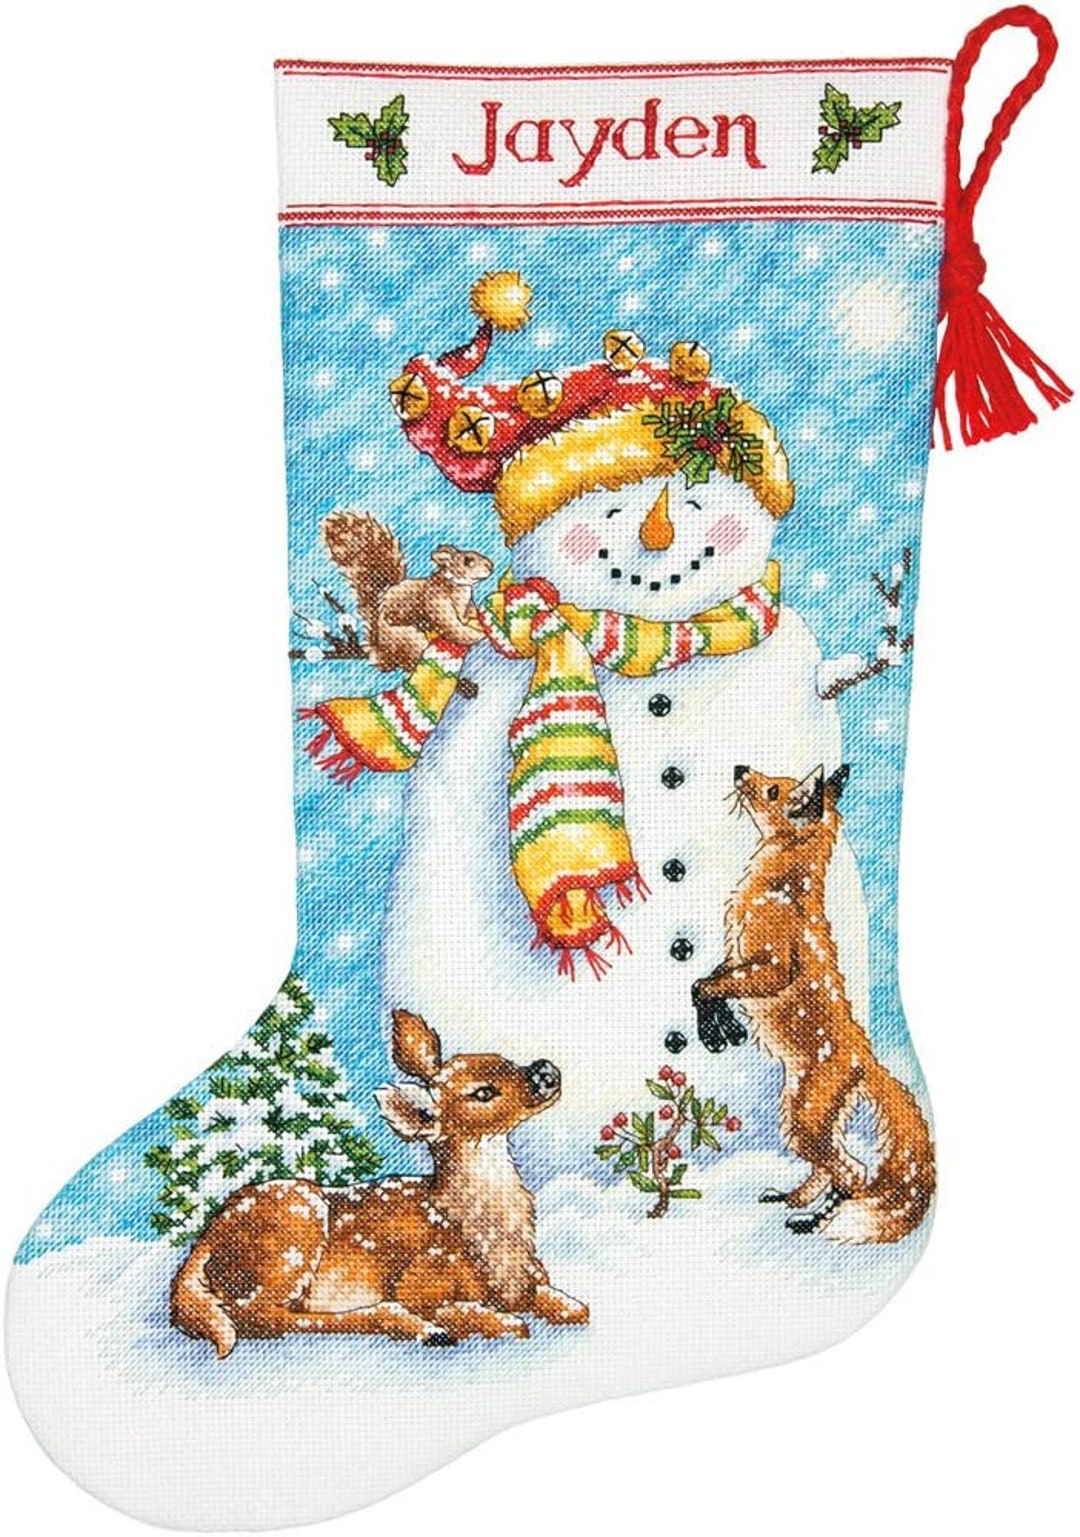 Herrschners - Seasonal - Christmas - Stockings - Page 1 - Herrschners